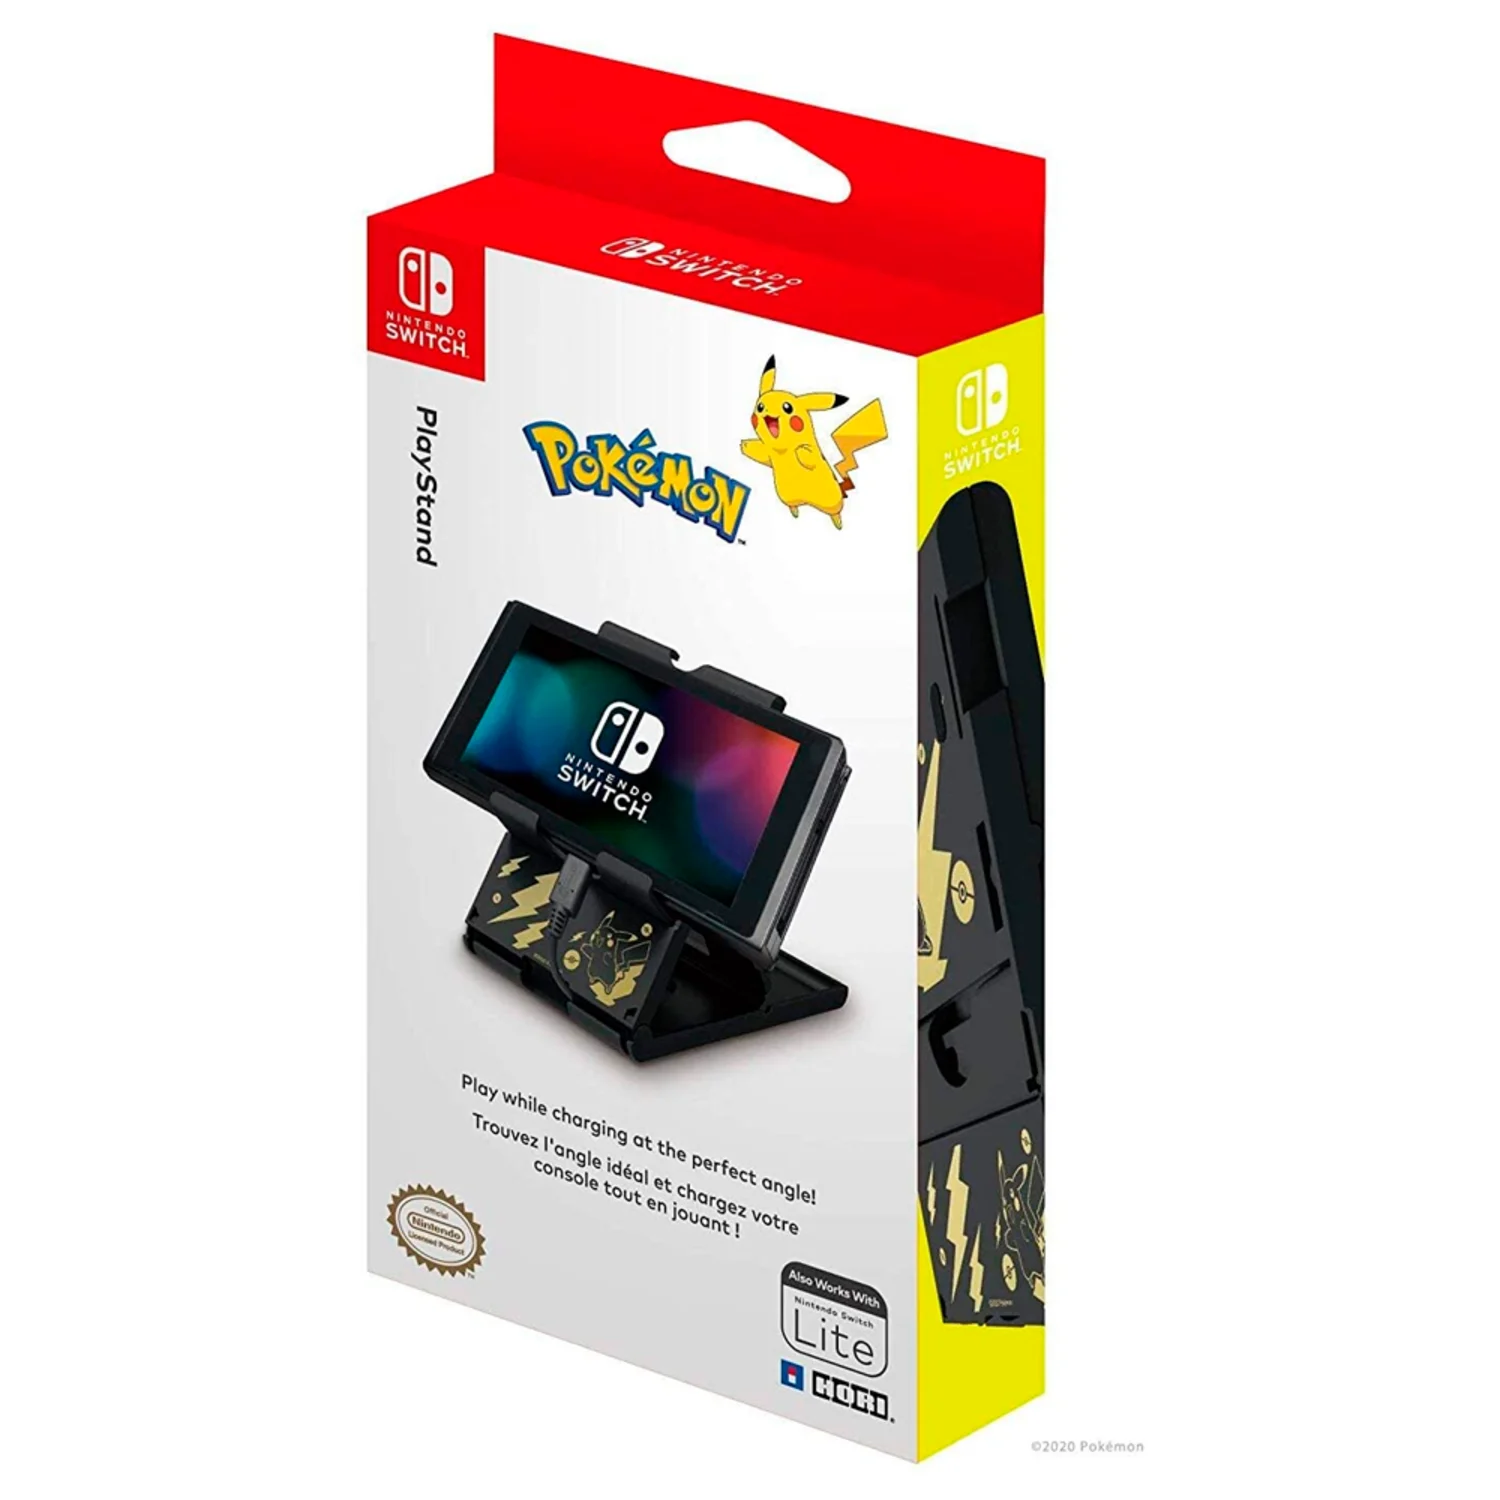 Suporte Playstand Hori Pokemon: Black & Gold Pikachu para Nintendo Switch e Lite - (NSW-294U)